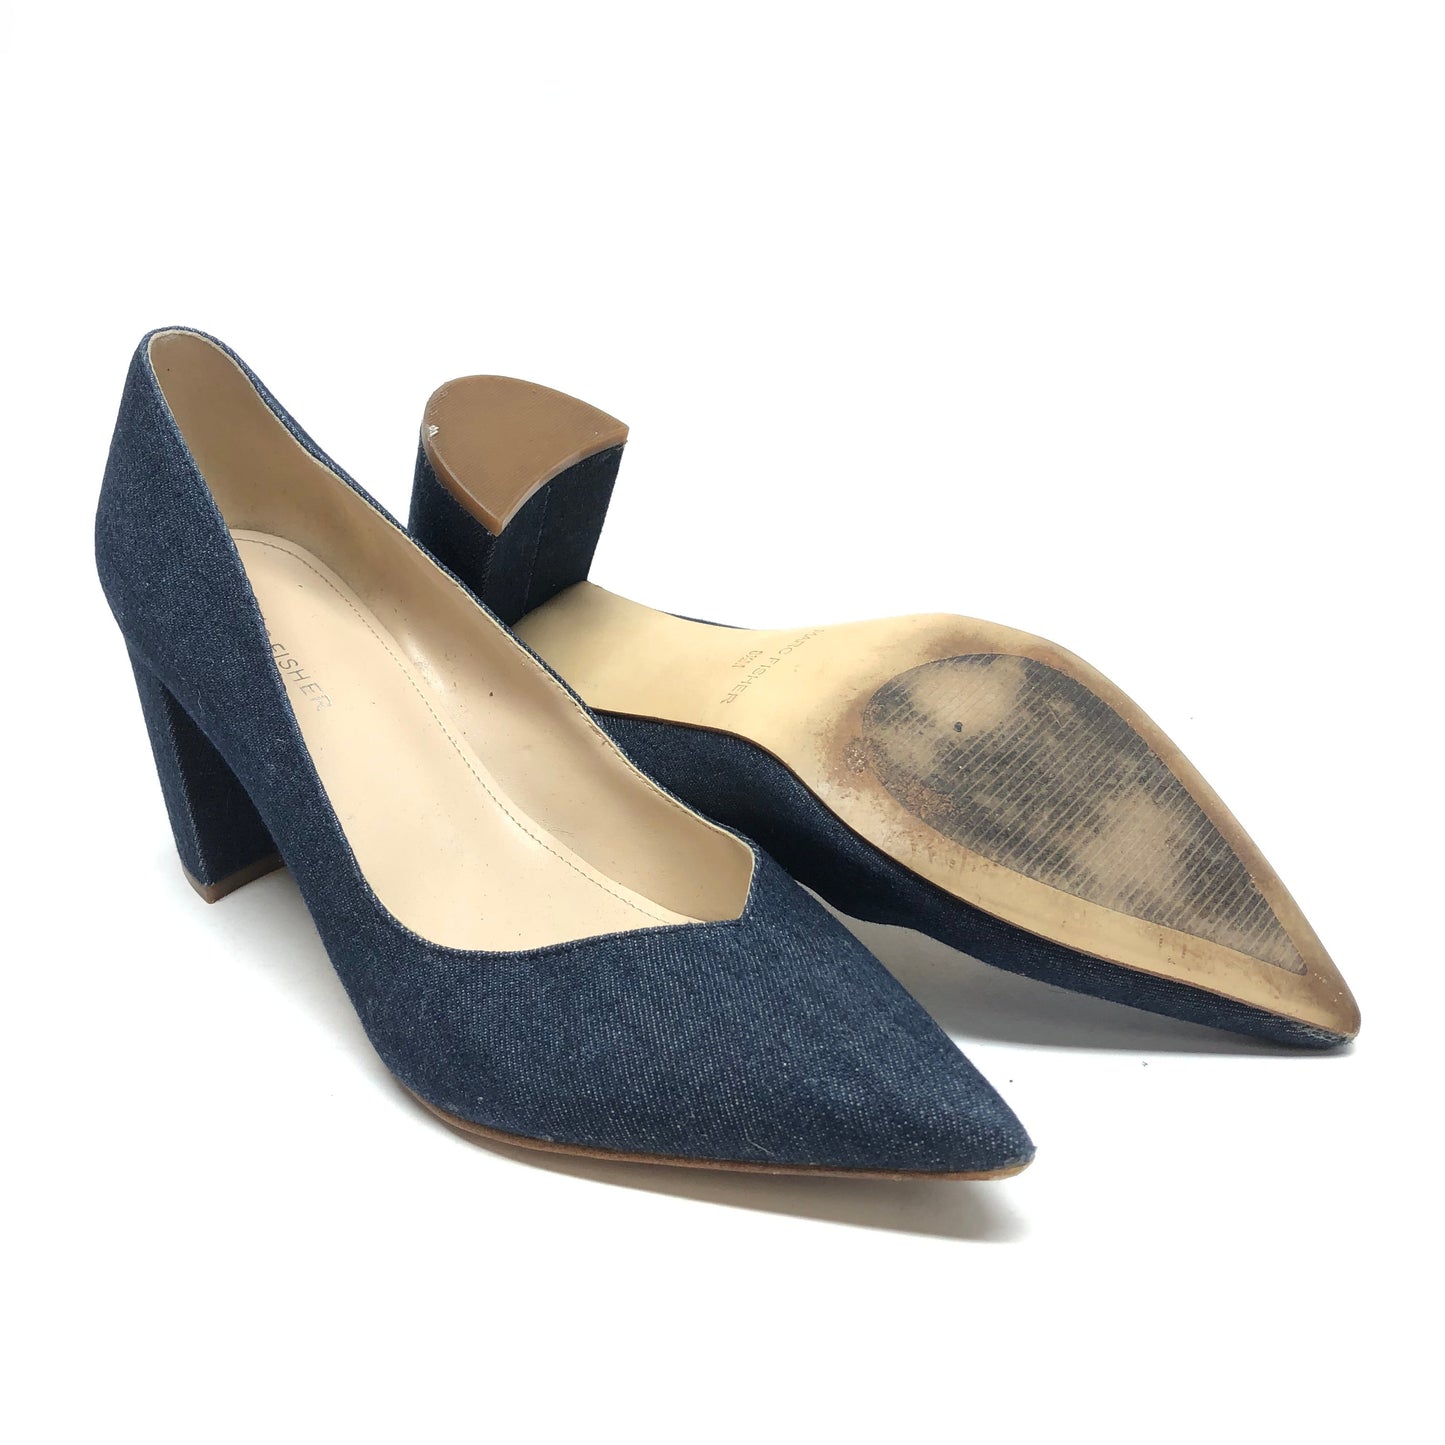 Blue Denim Shoes Heels Block Marc Fisher, Size 8.5